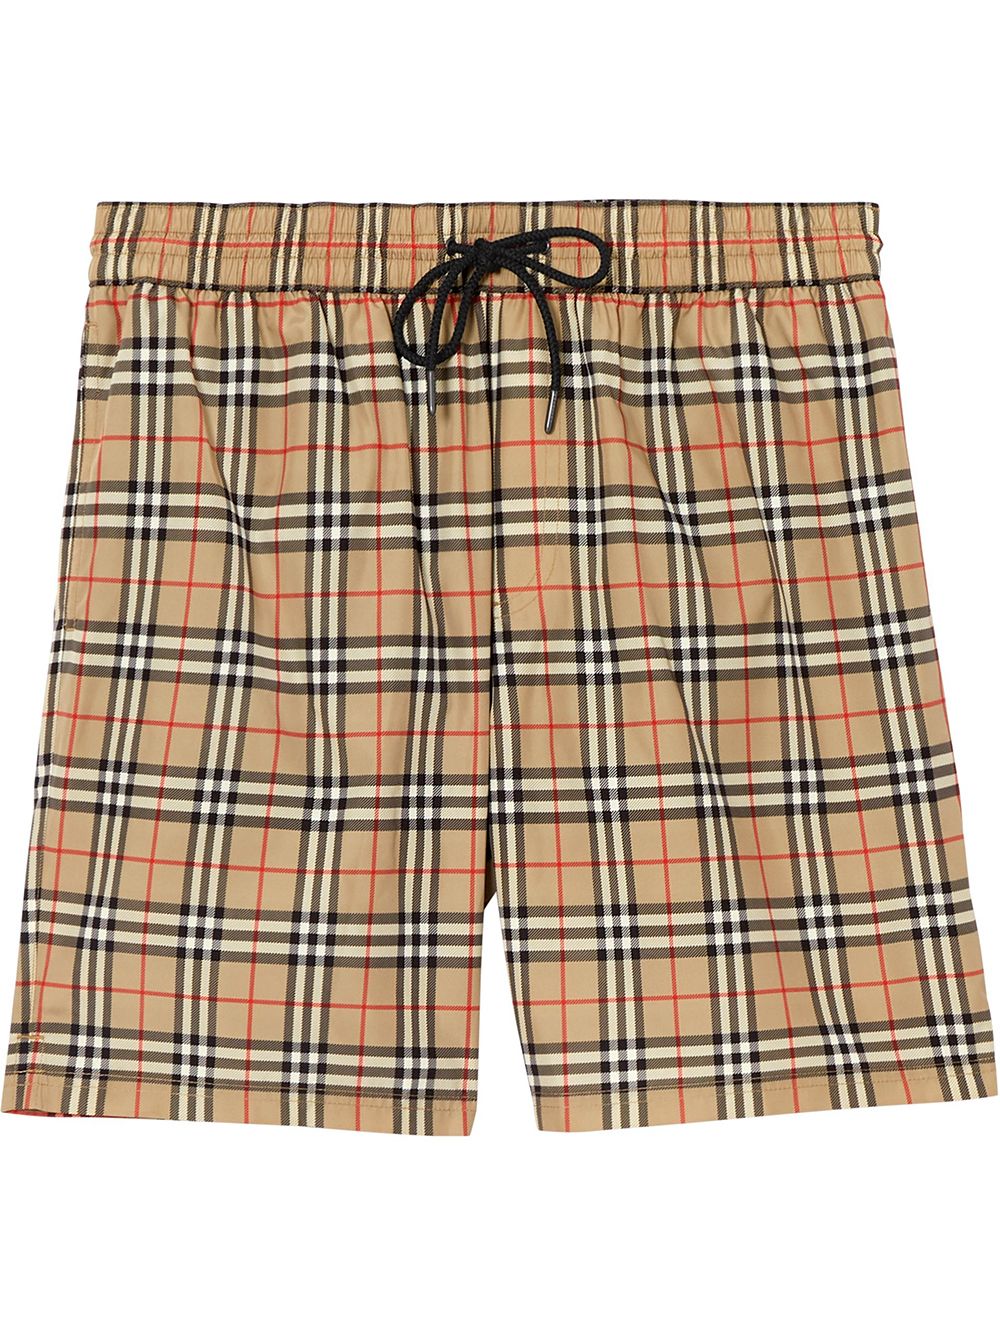 Vintage Check print swim shorts<BR/><BR/><BR/>